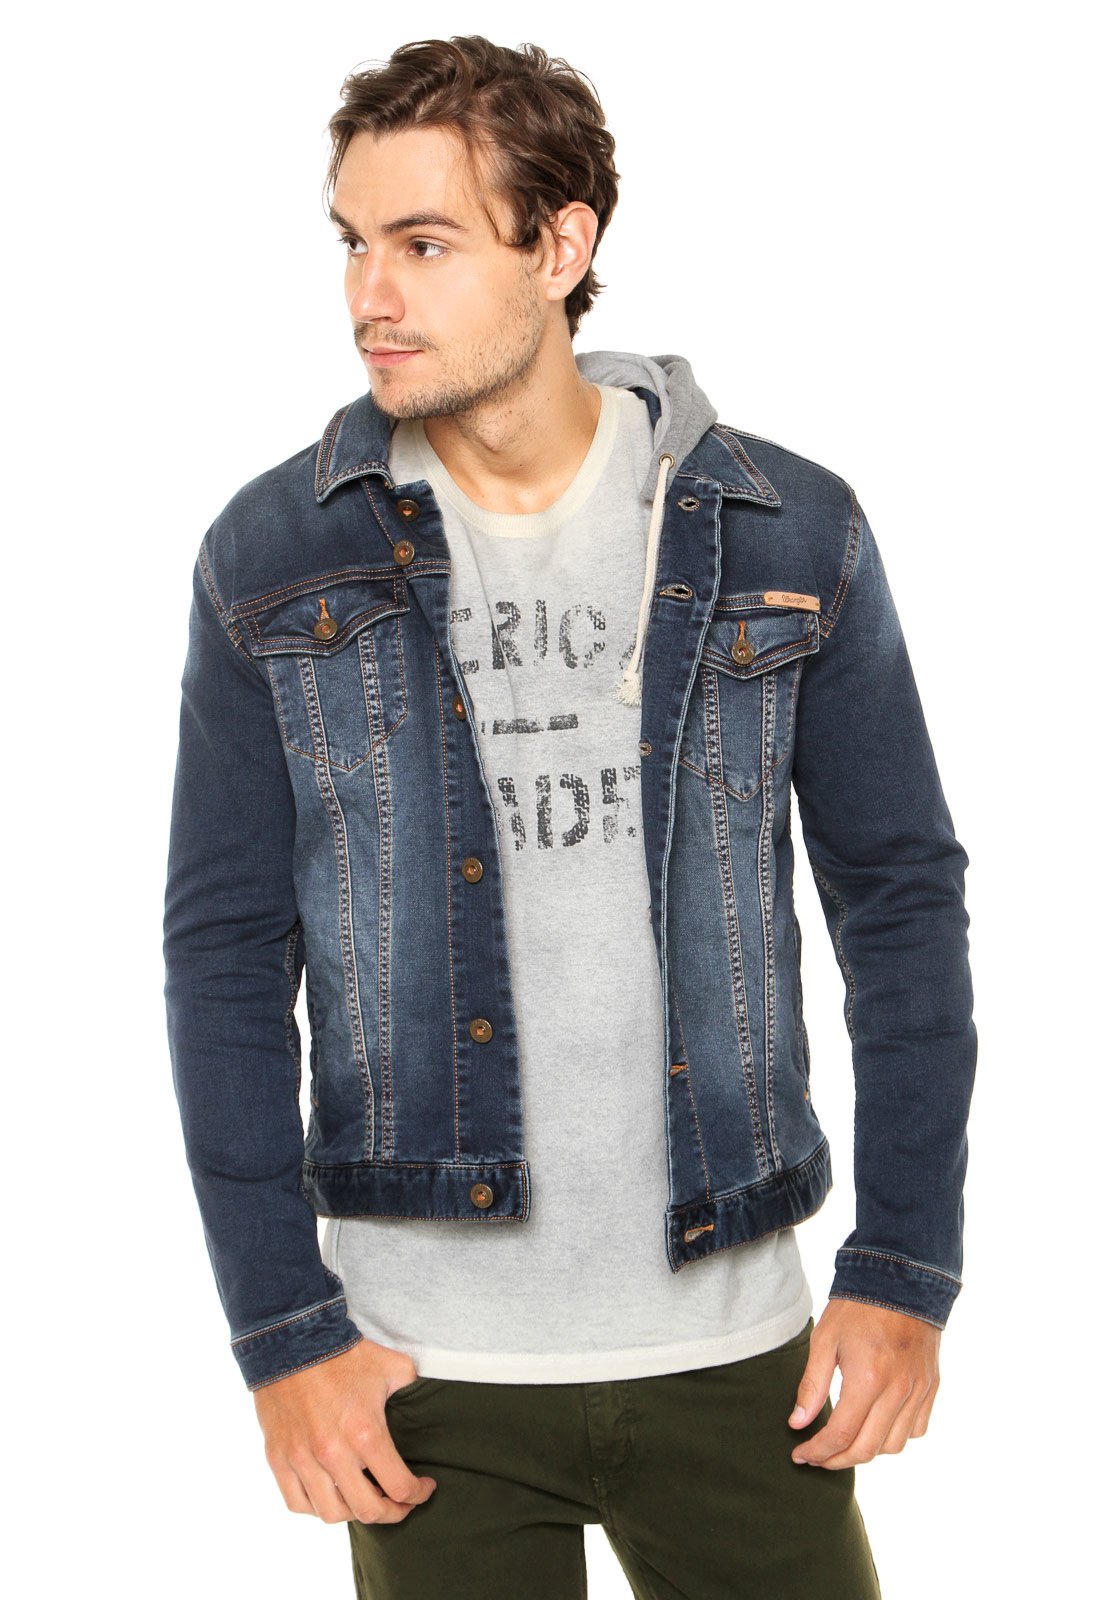 jaqueta jeans masculina wrangler